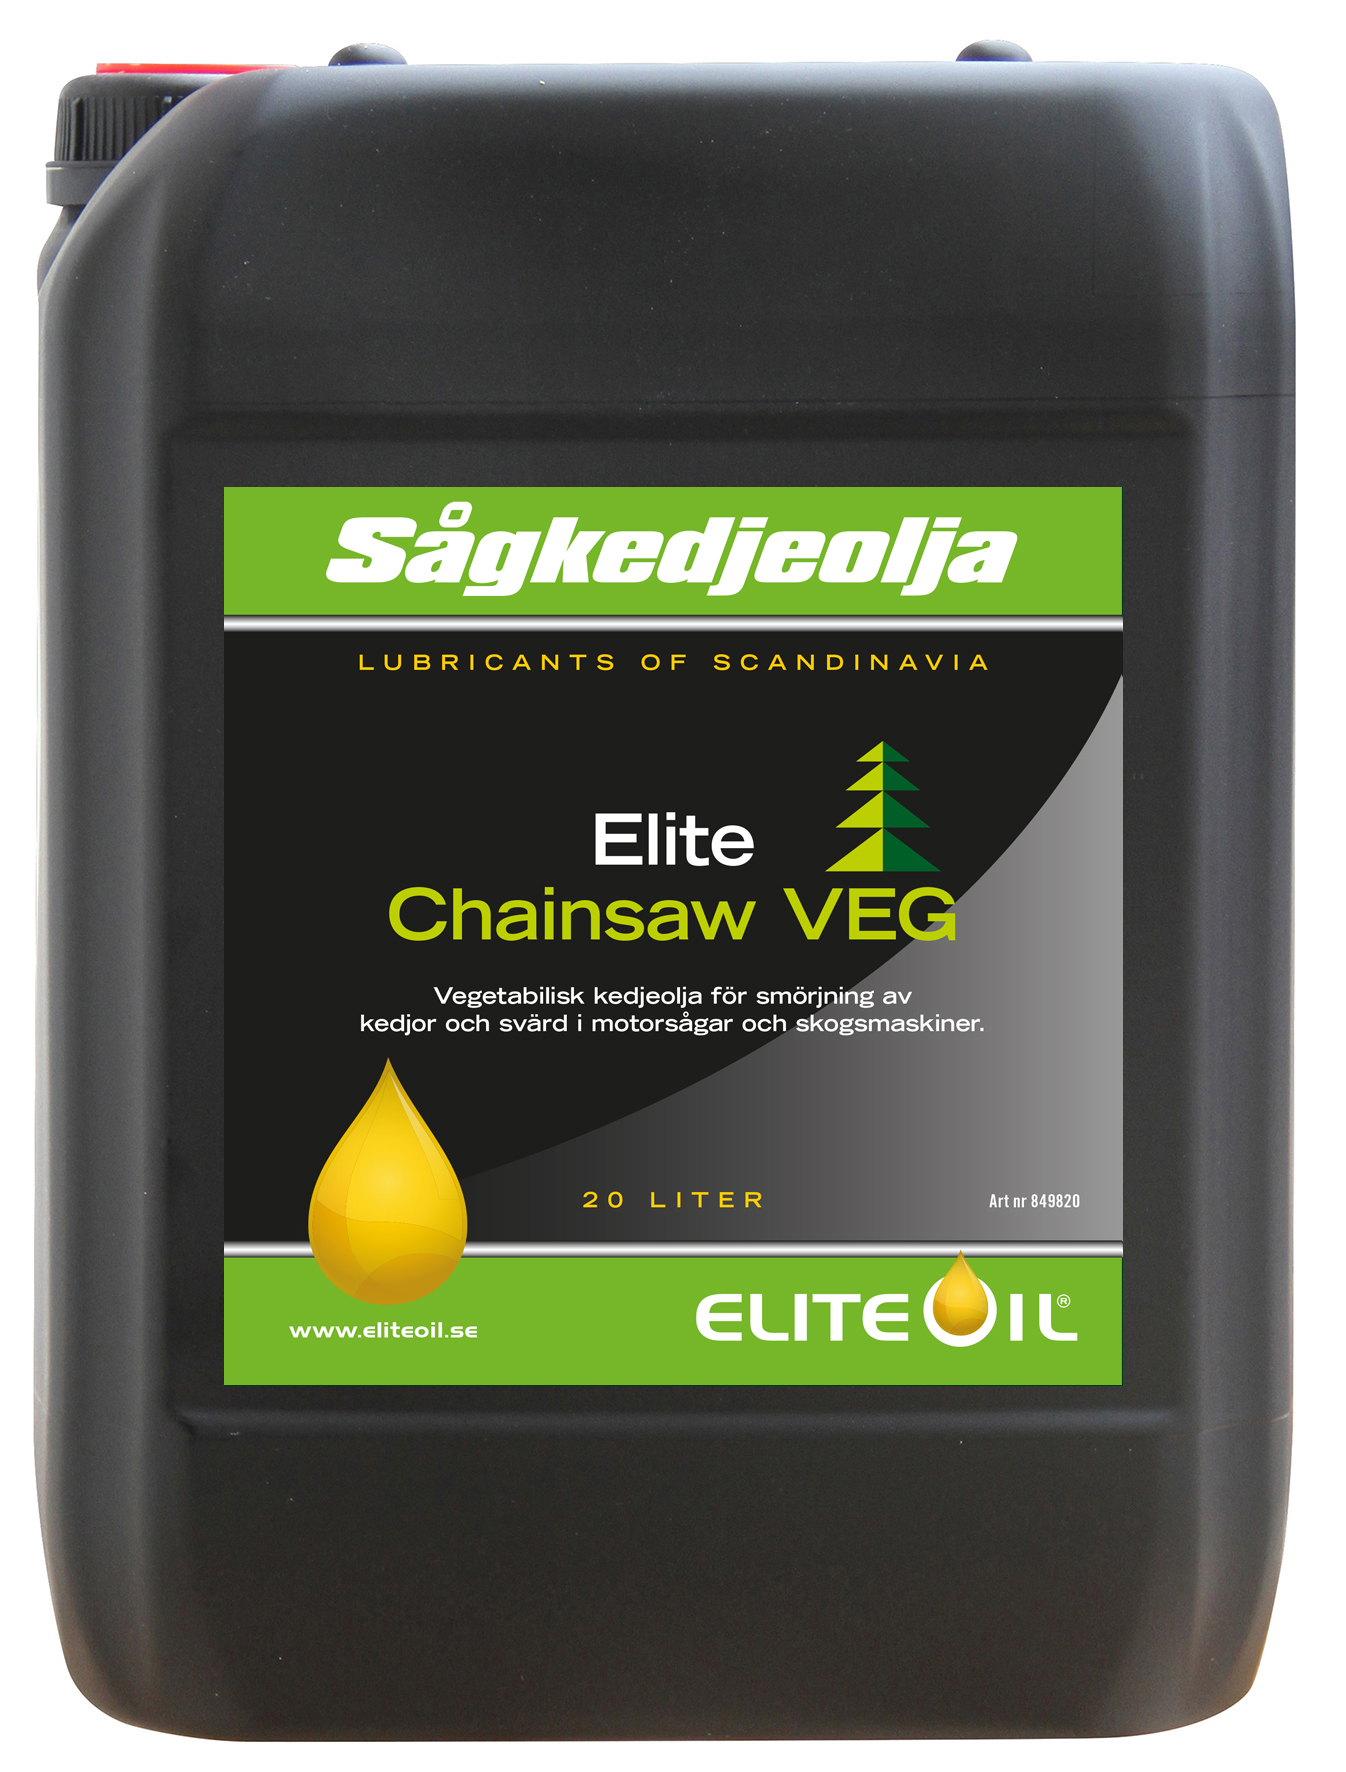 Elite Chain Saw VEG, 20 liter dunk